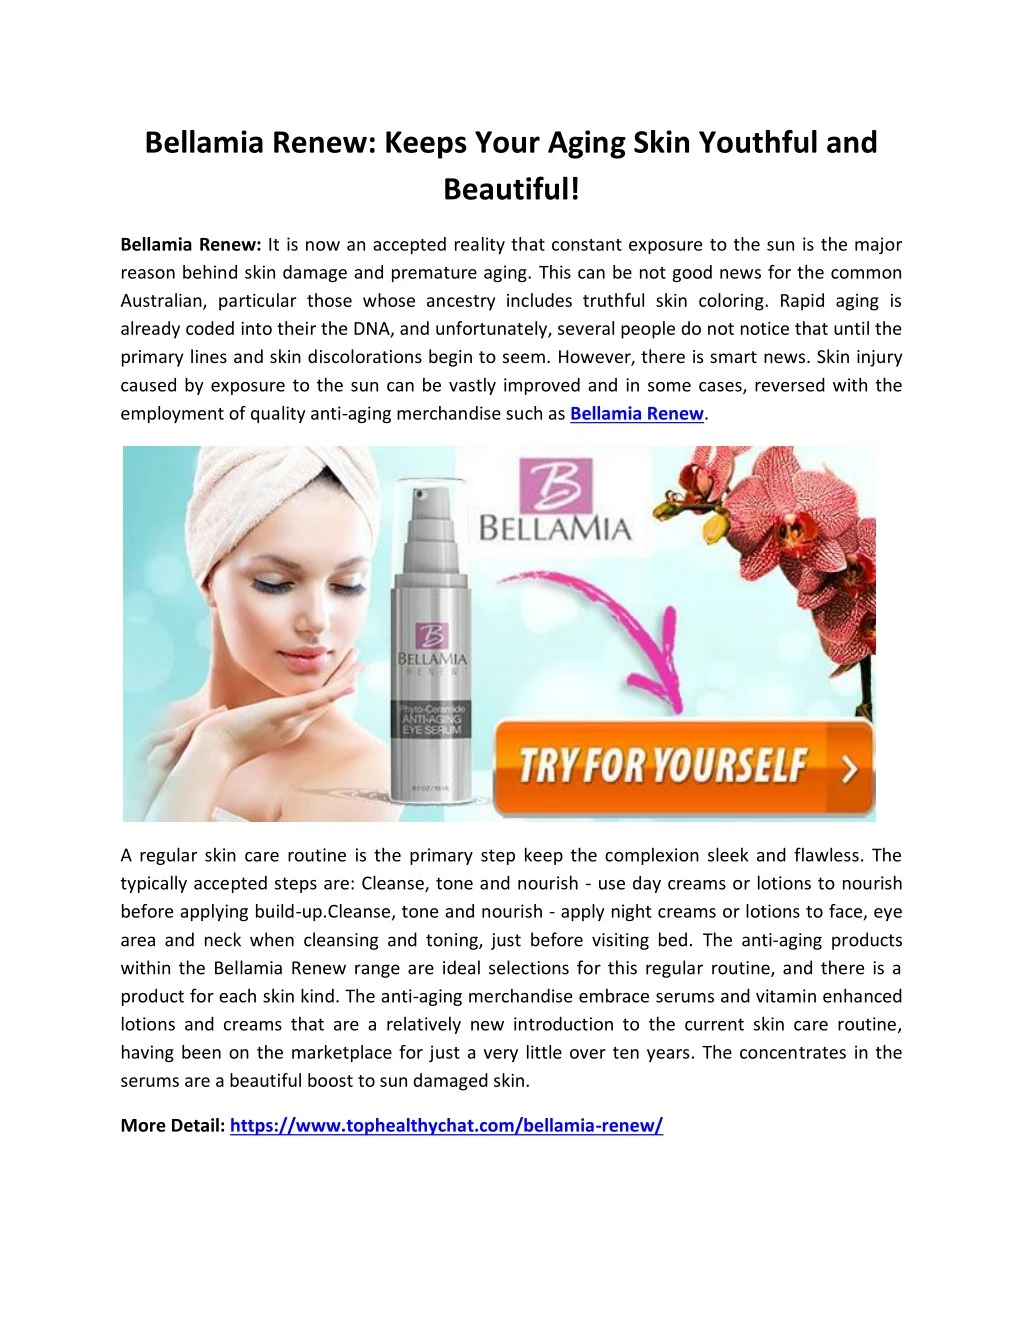 bellamia renew keeps your aging skin youthful